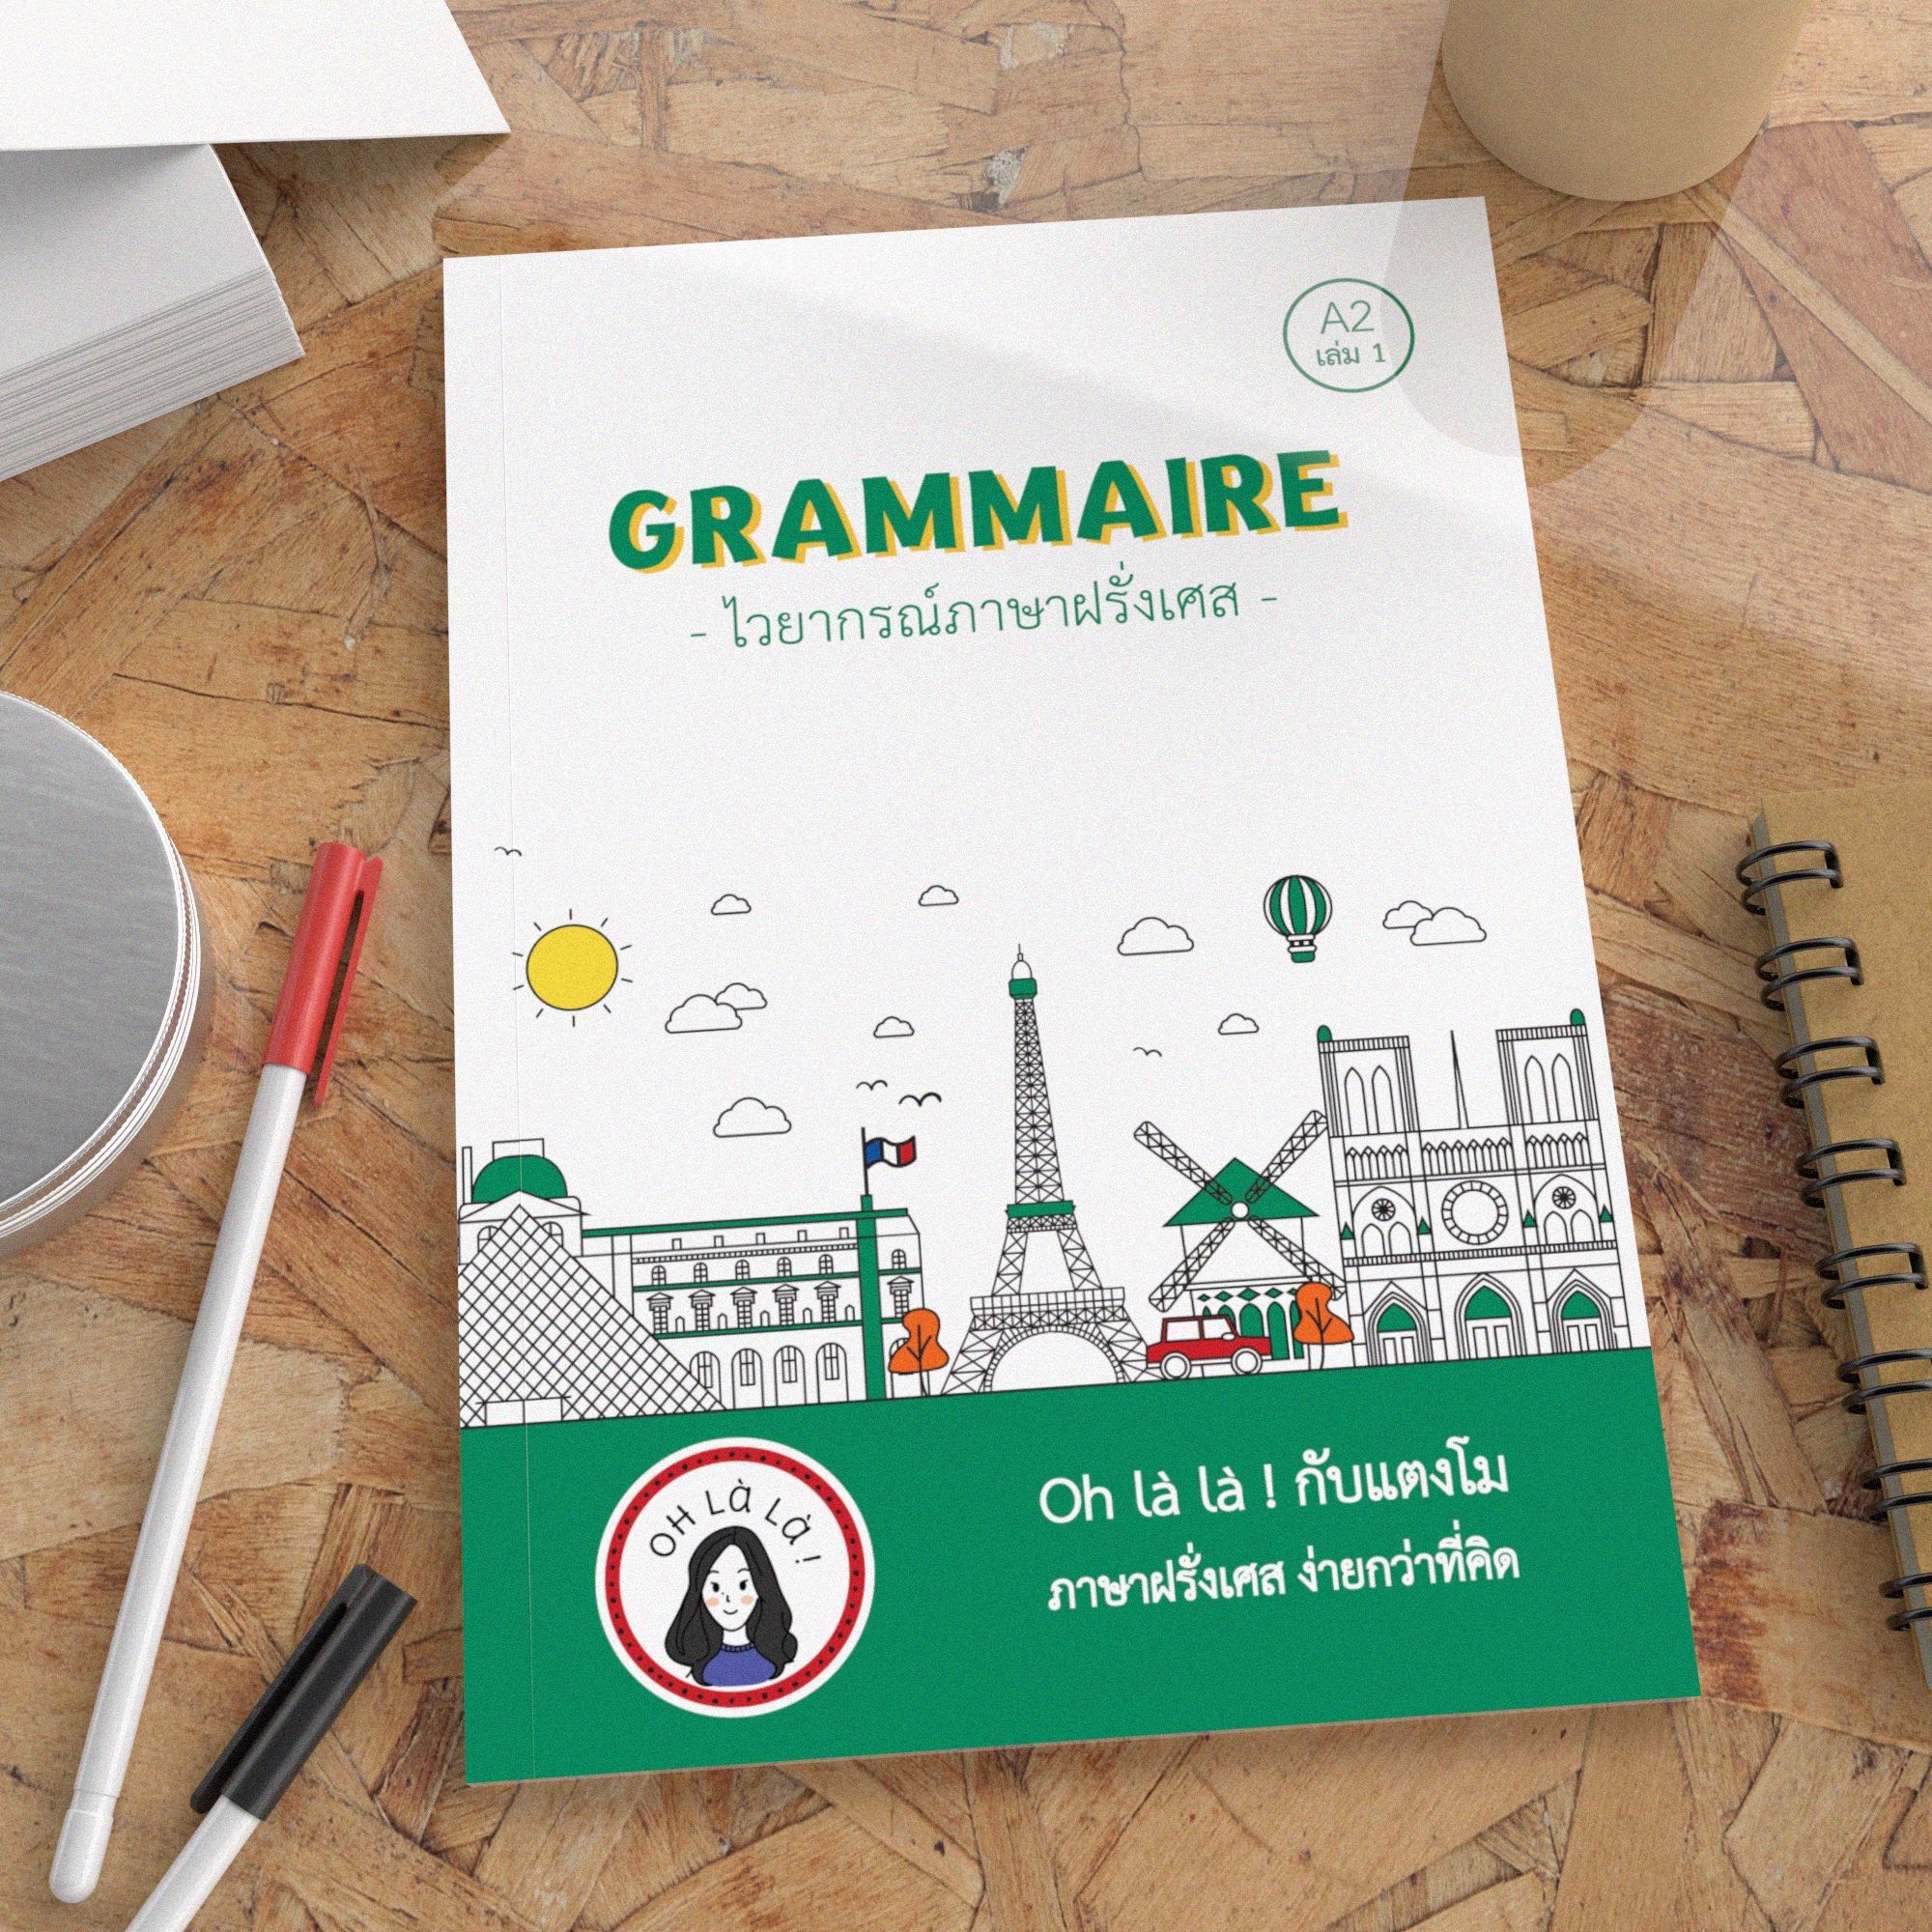 GRAMMAIRE หนังสือไวยากรณ์ภาษาฝรั่งเศส ระดับ A2 เล่ม 1